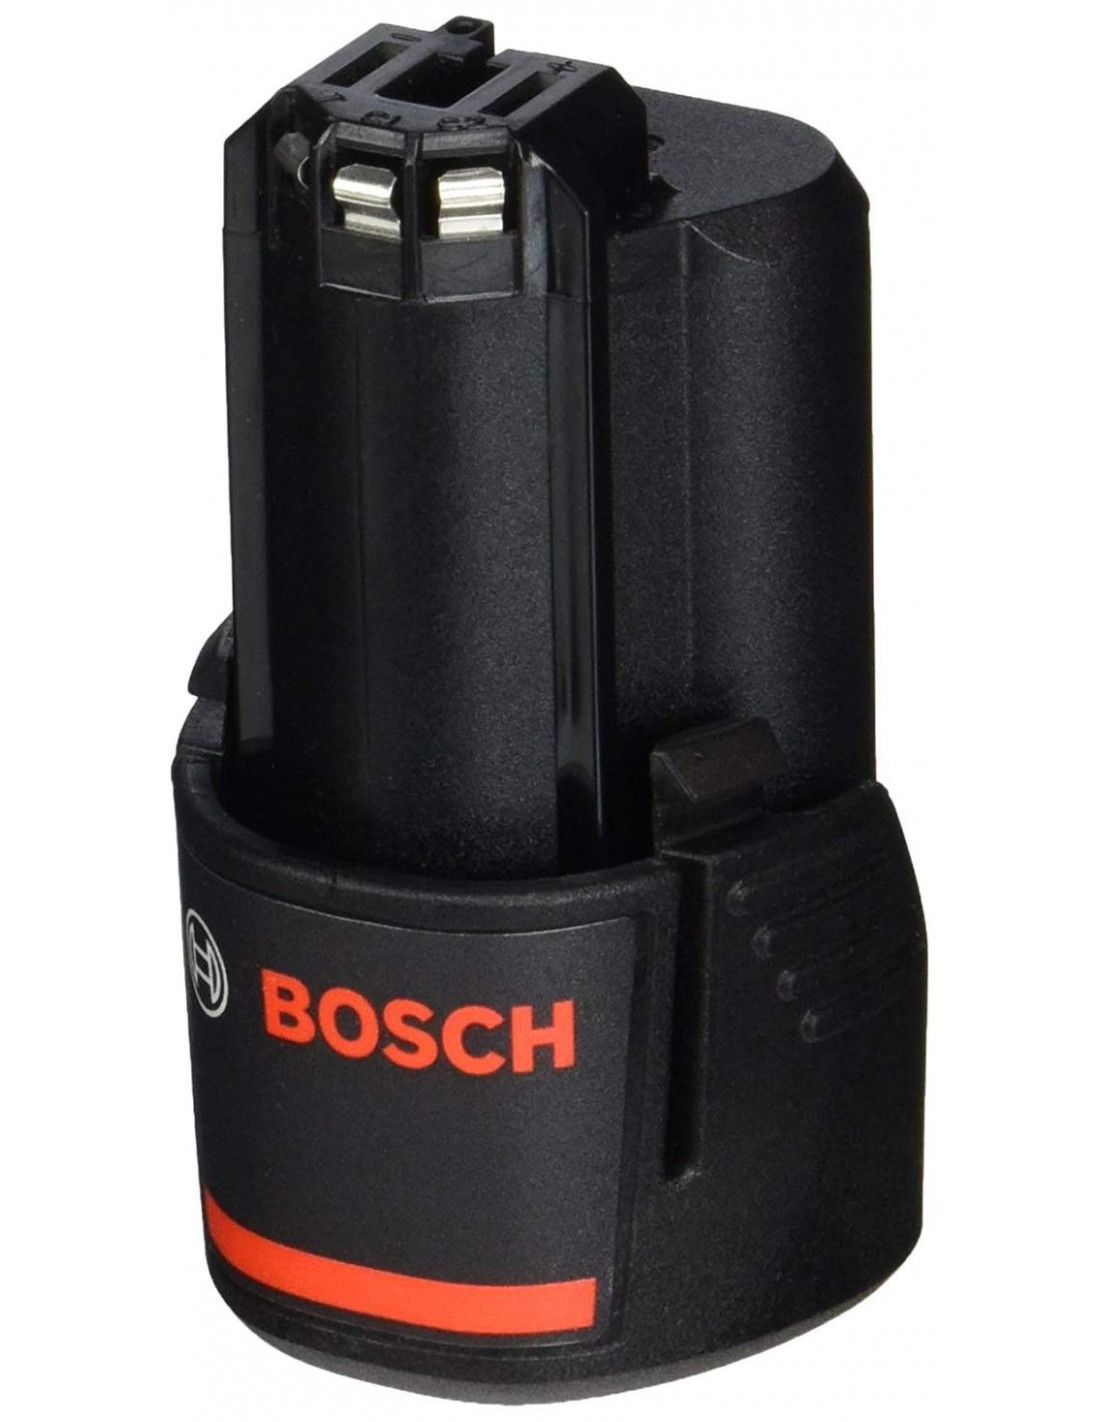 Batterie bosch pro 10,8 compatible 12V - La pause café - LJVS - Fr